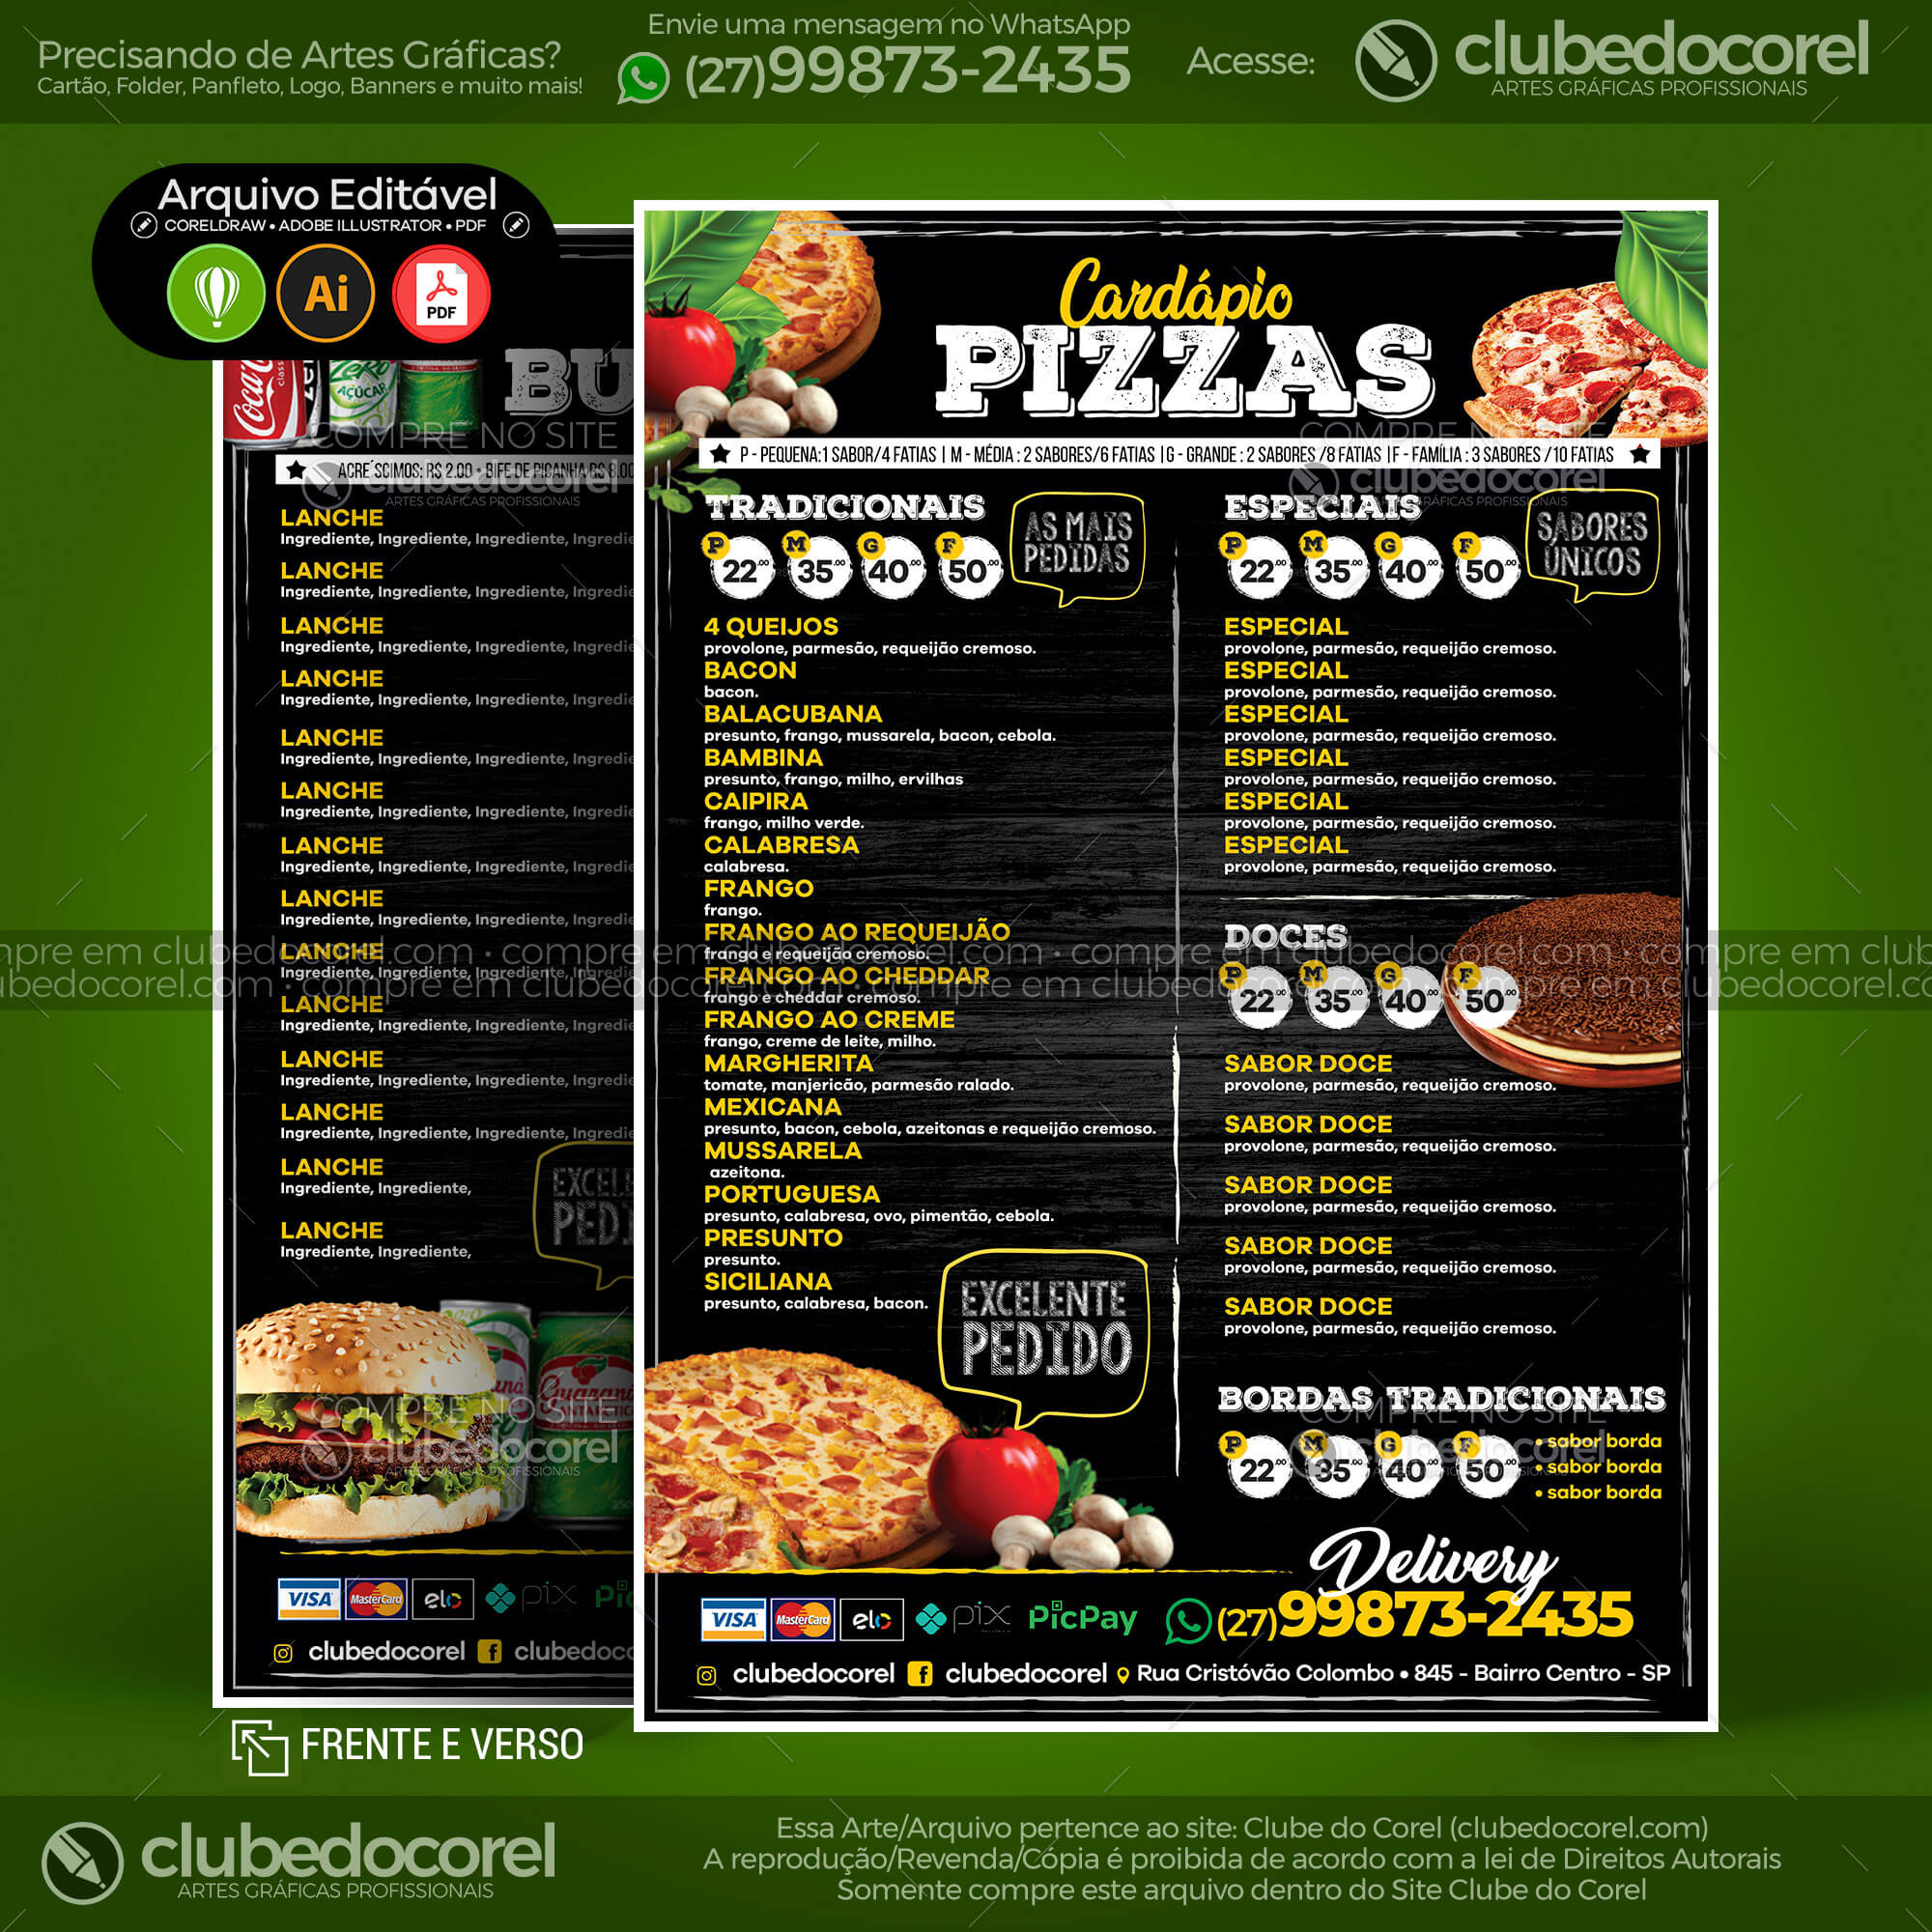 Cardápio Pizzaria #02 - Pizza e Hamburguer [CDR AI PDF] | Clube do Corel - cardapio pizzaria